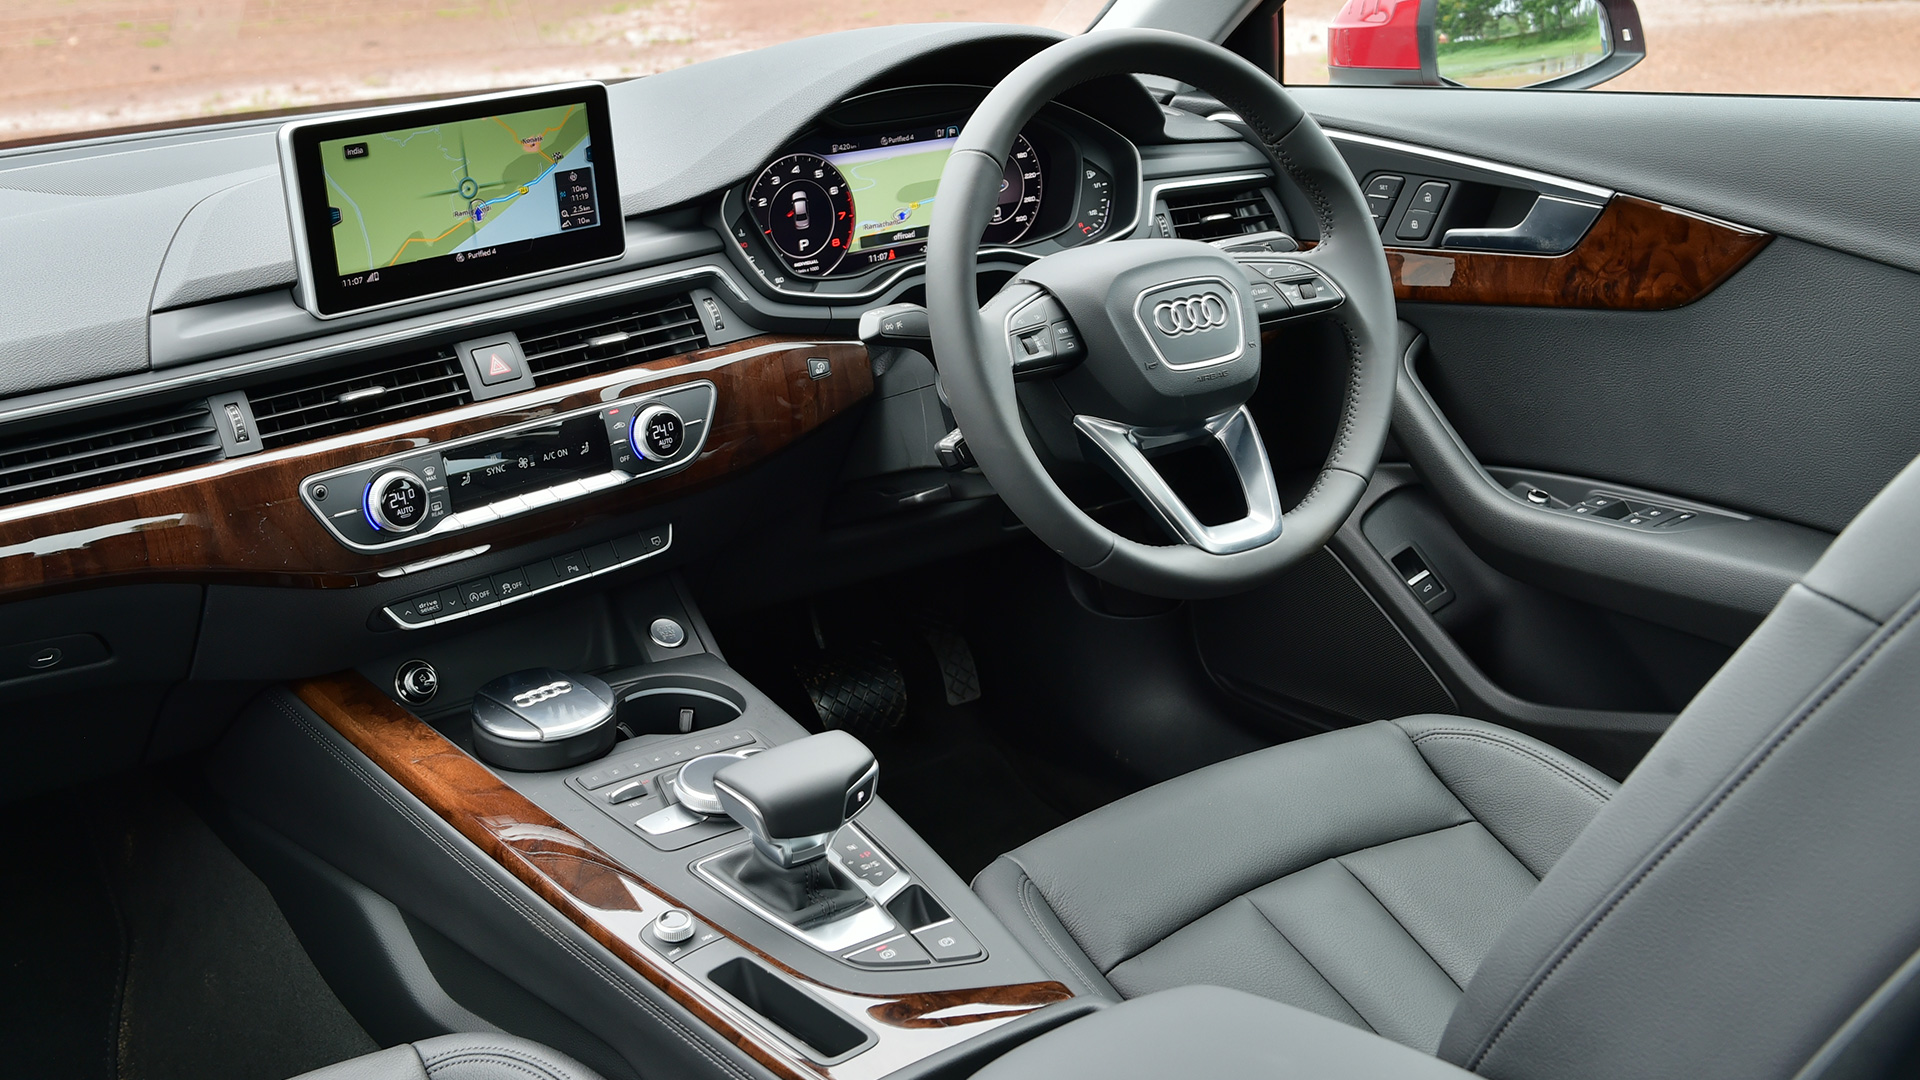 Audi A4 2016 30 TFSI Technology Compare